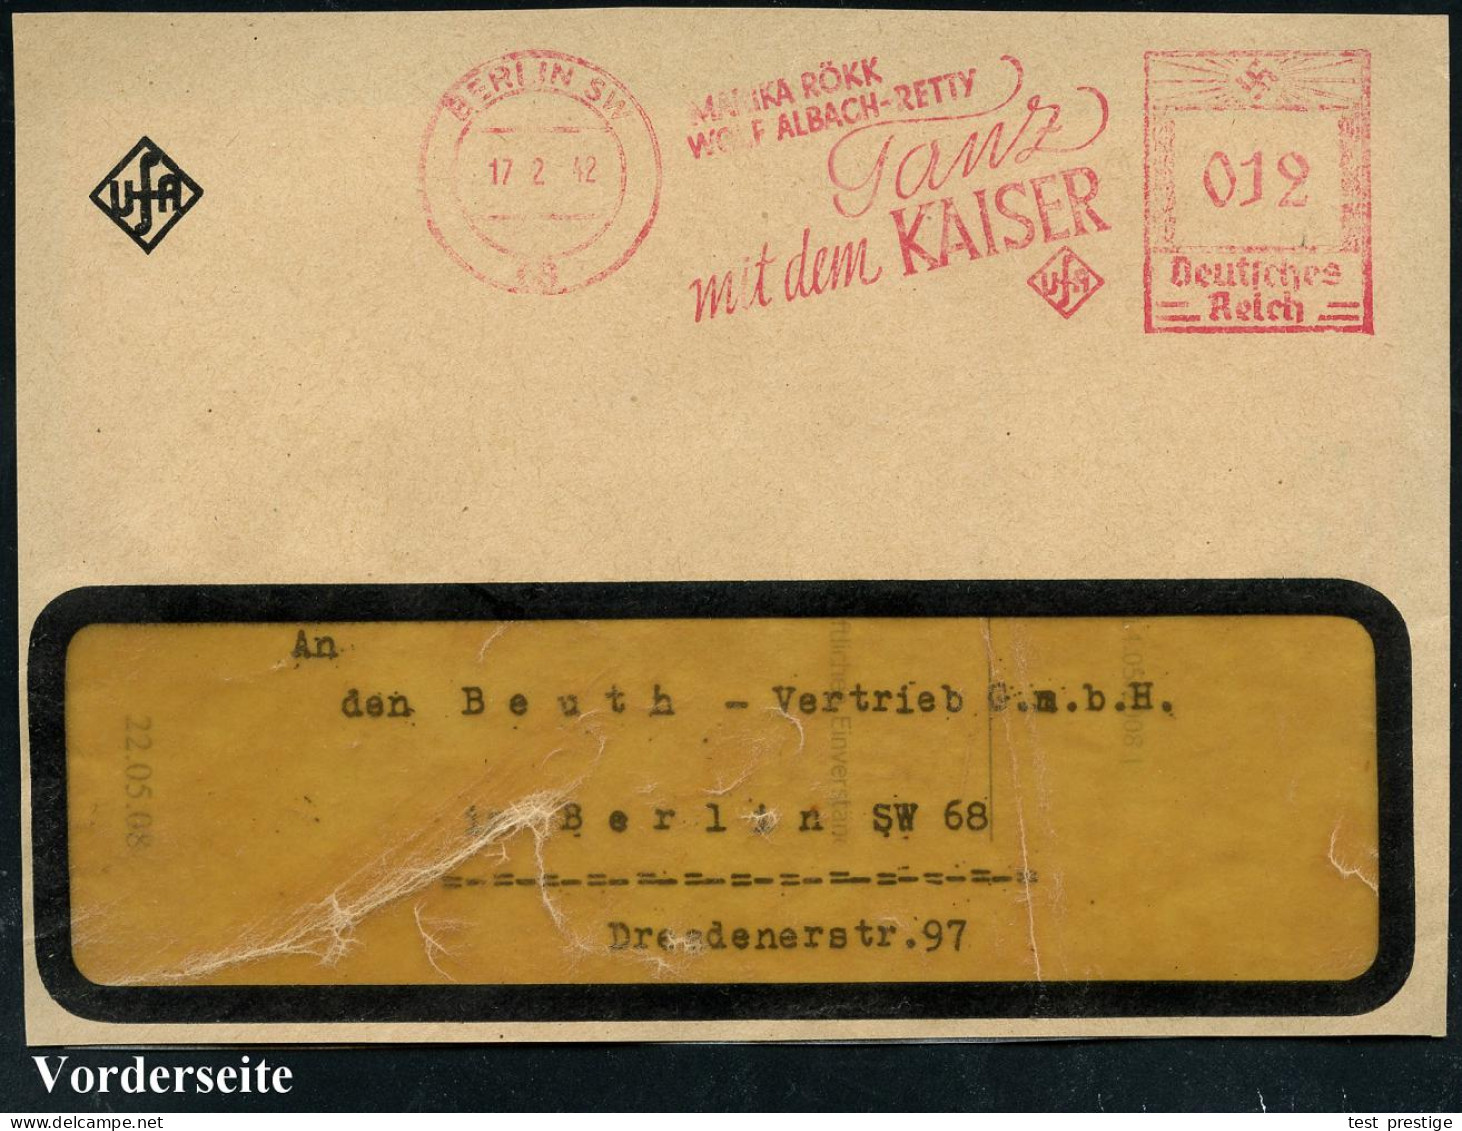 BERLIN SW 68/ MARIKA RÖKK/ W.ALBACH-RETTY/ Tanz/ Mit Dem KAISER/ UfA 1942 (17.2.) Seltener AFS Francotyp = Film über Kai - Tanz